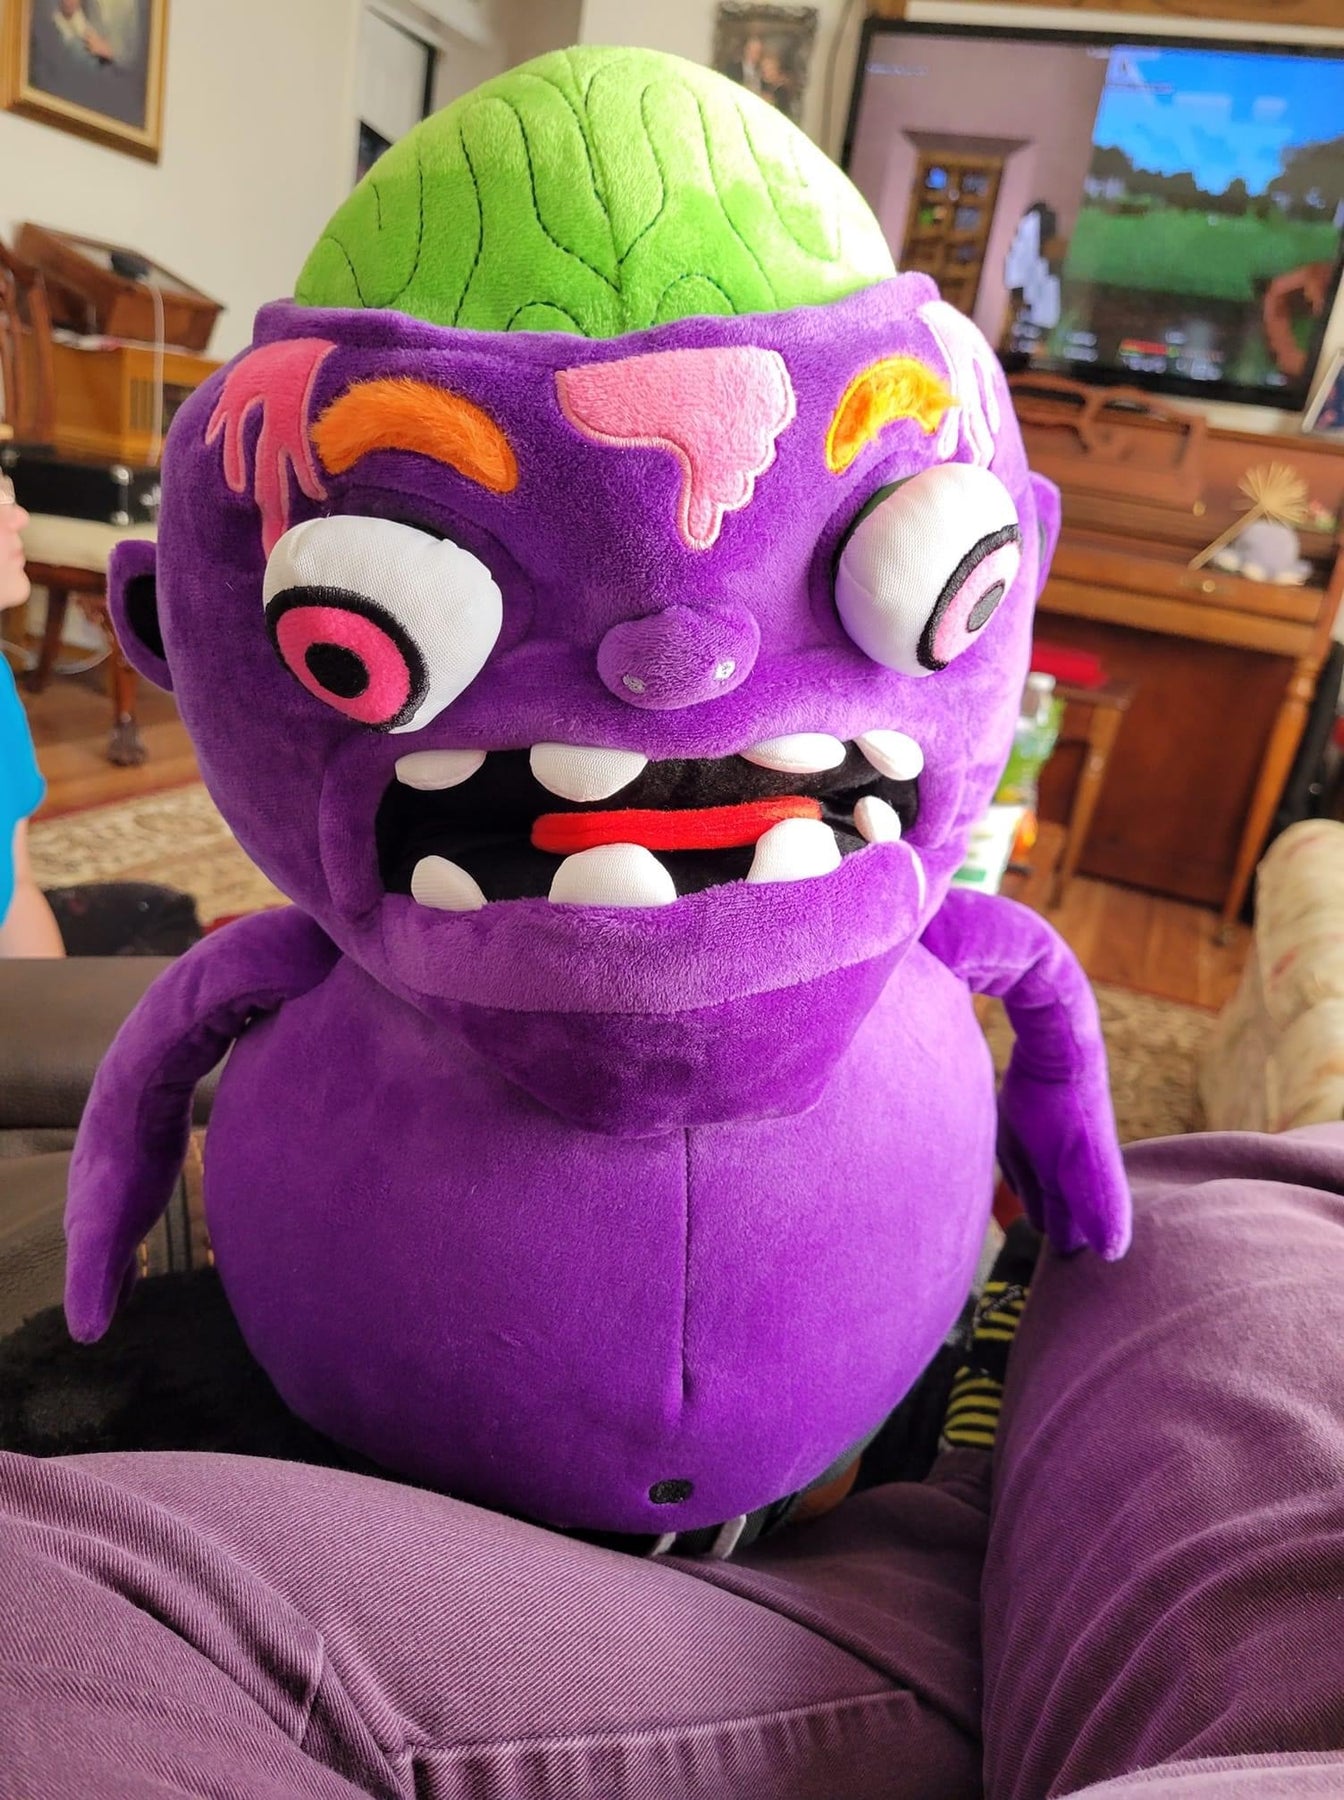 Purple Zombie based on the plush : r/PlantsVSZombies